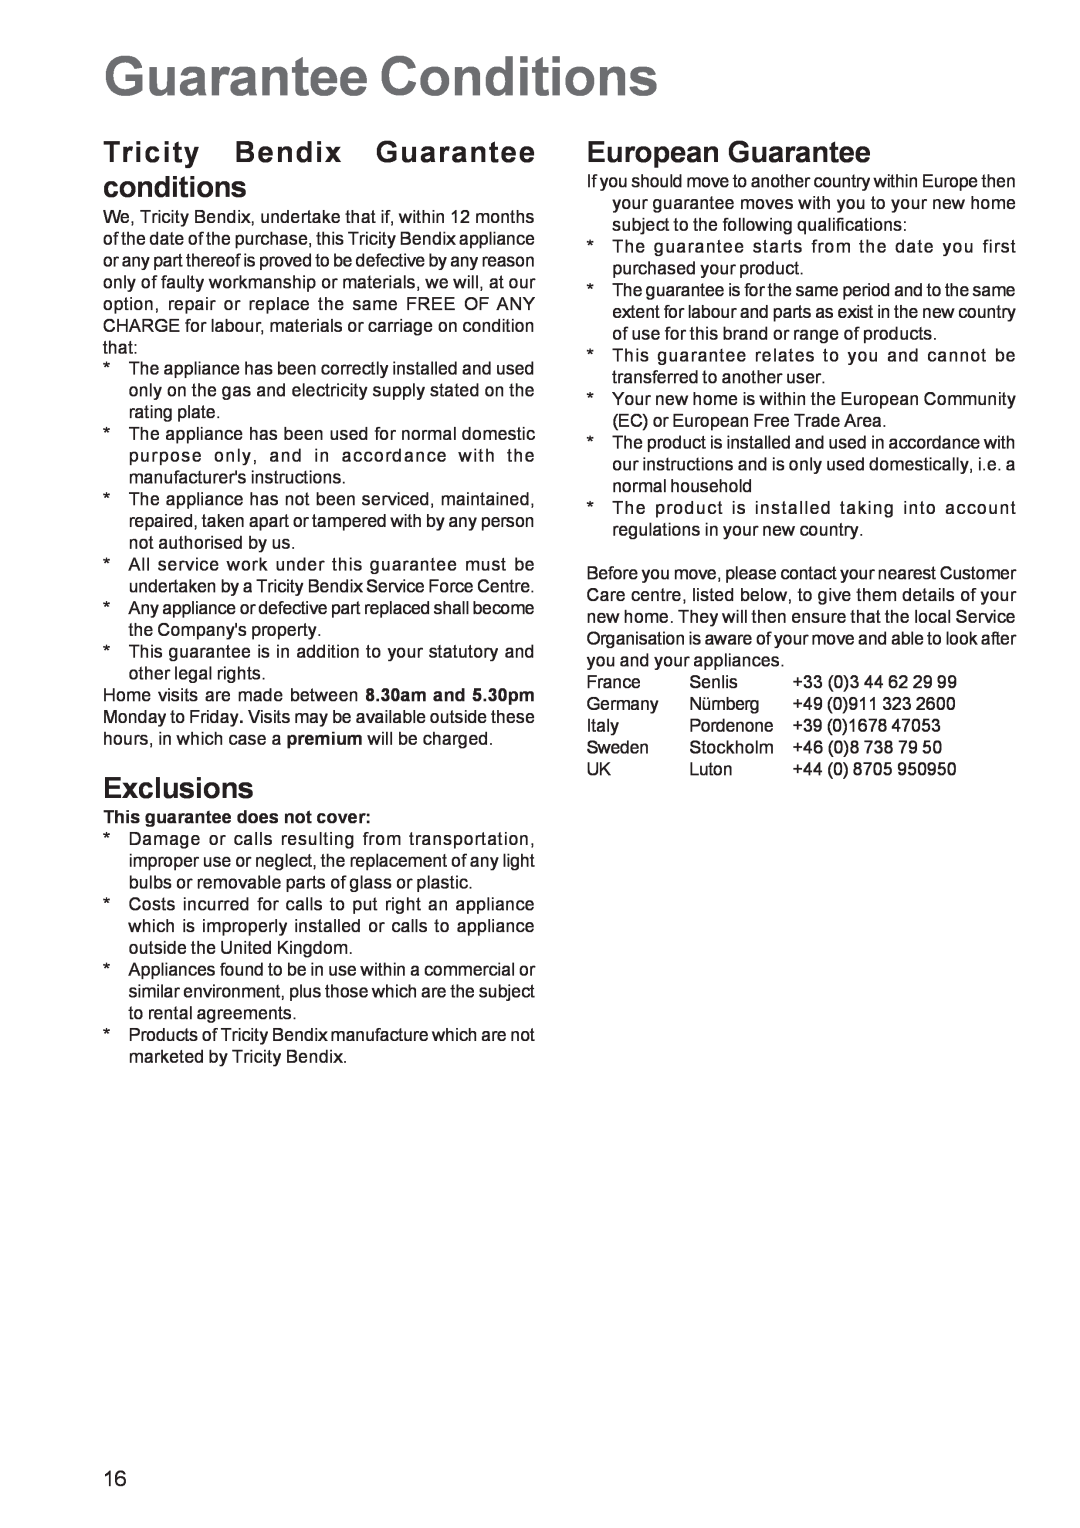 Tricity Bendix TBF 610 manual Guarantee Conditions, Tricity Bendix Guarantee conditions, Exclusions, European Guarantee 